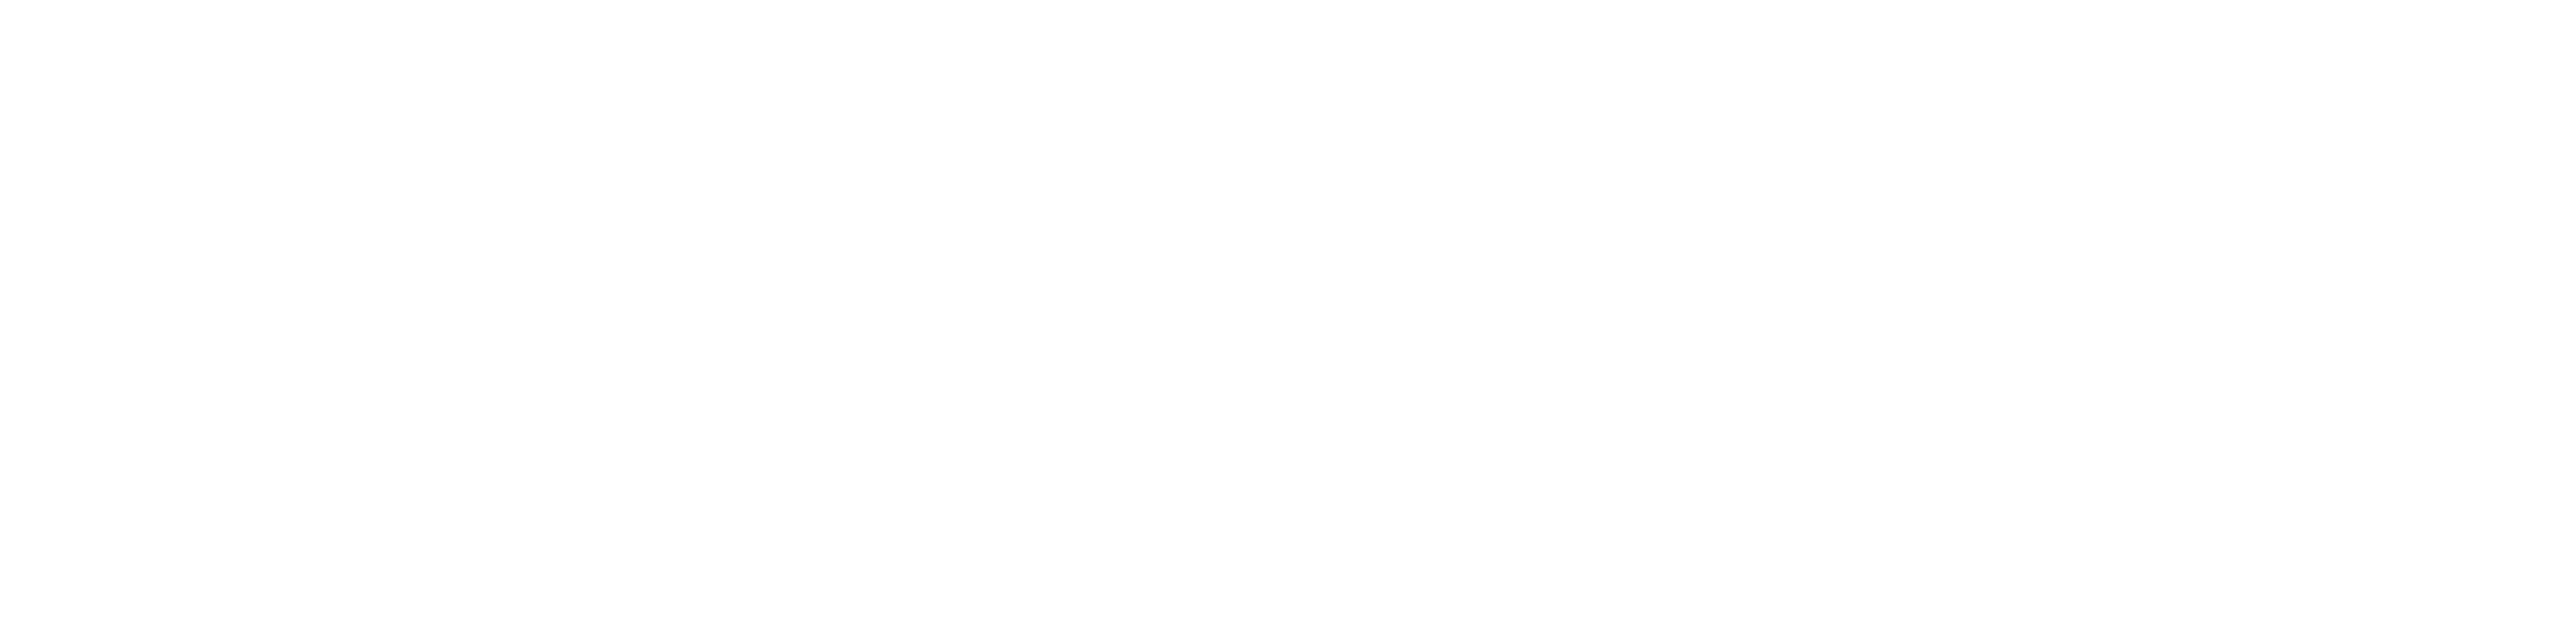 Trace Genomics Logo